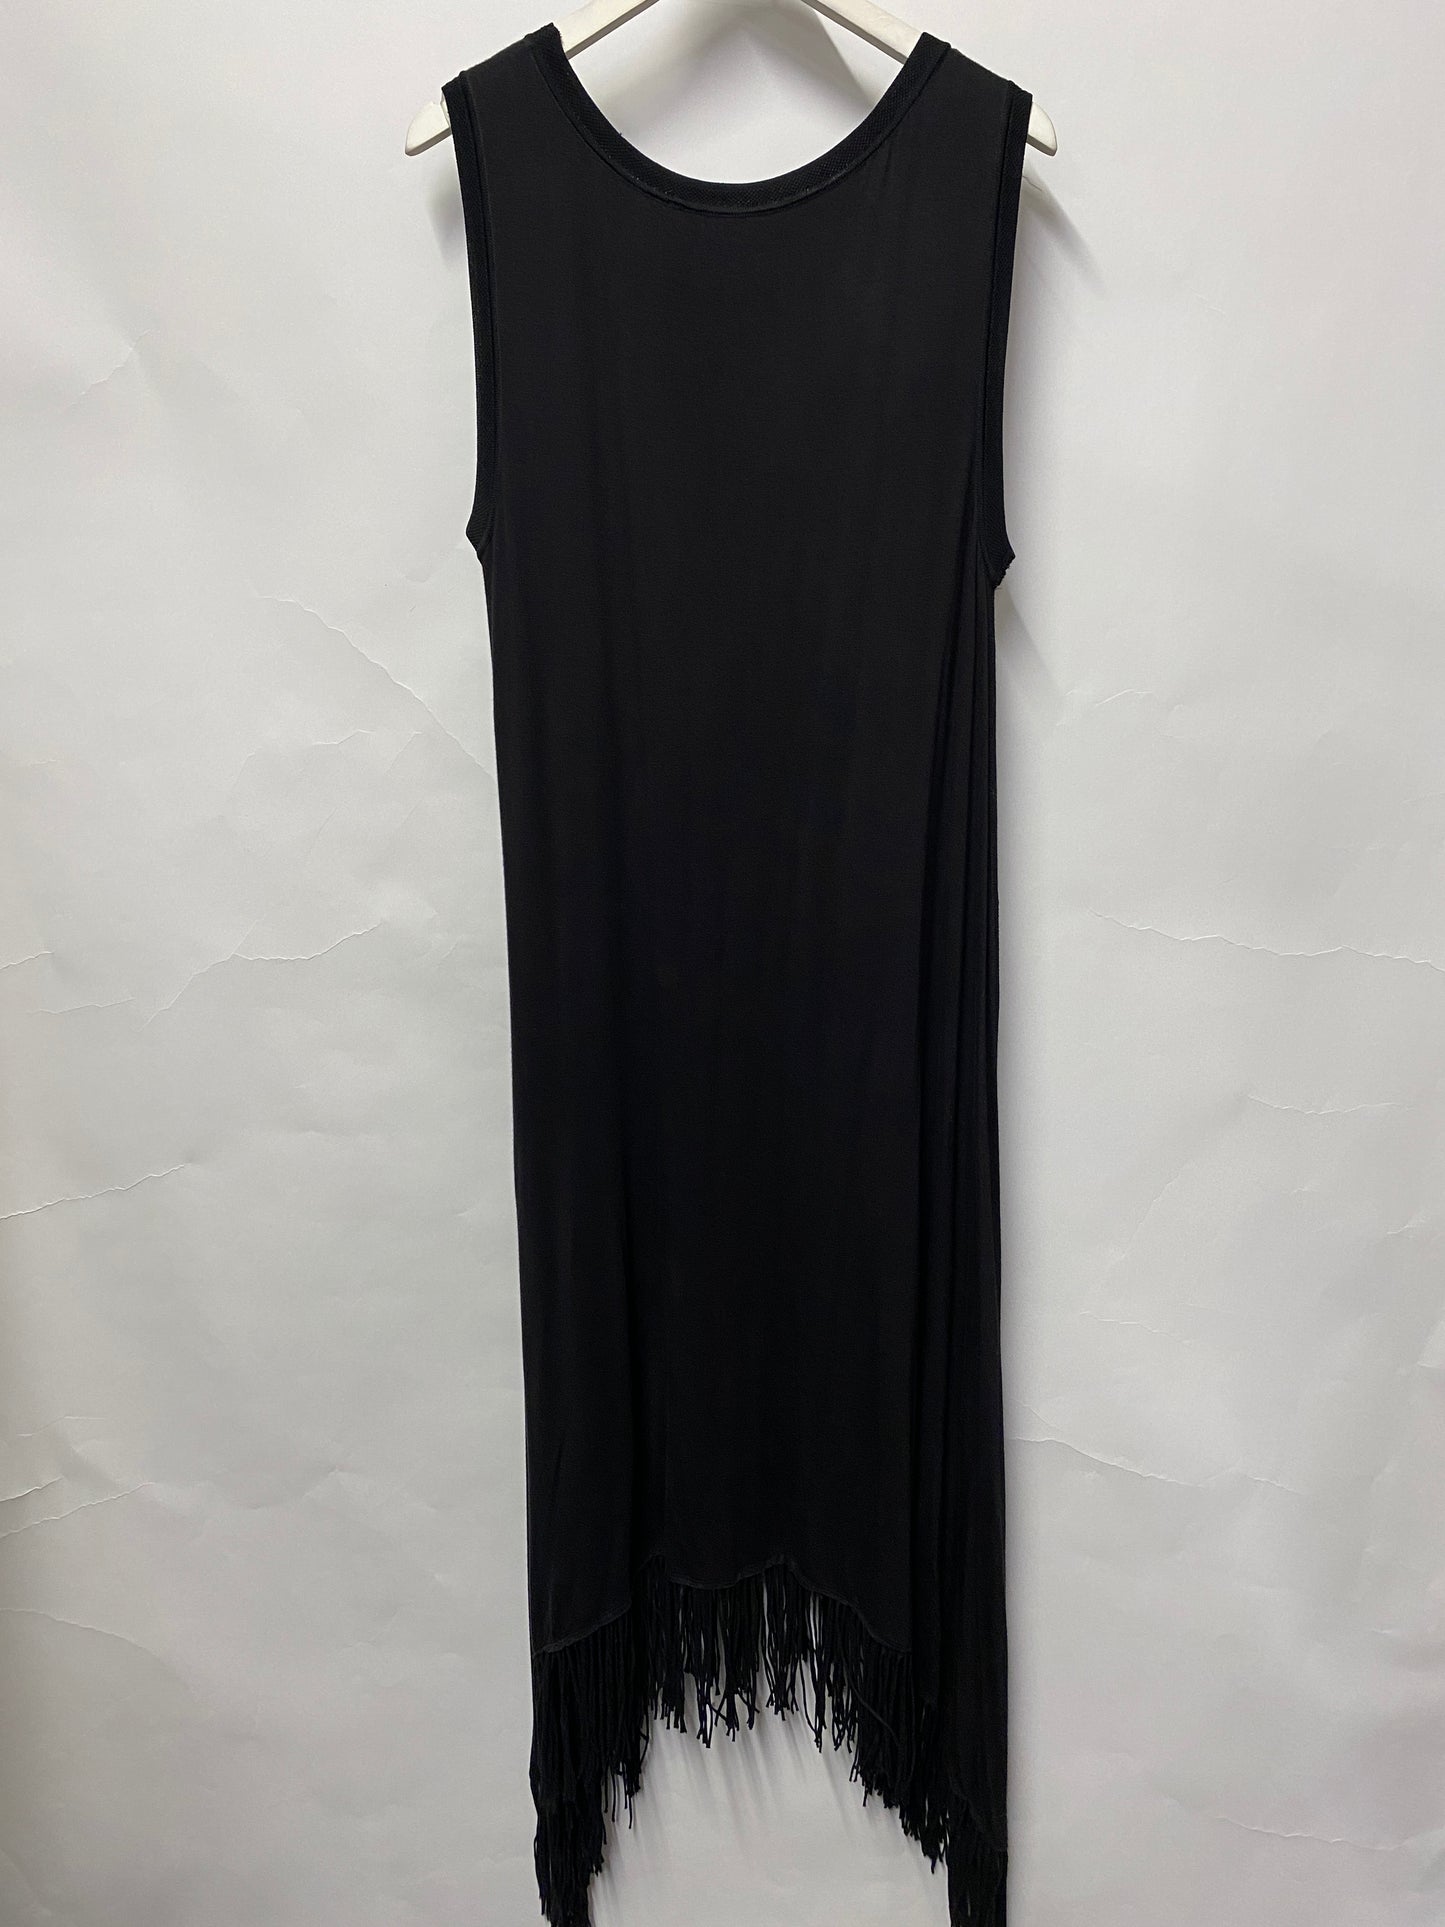 Elie Tahari Black Jersey Full Length Tunic Dress Large